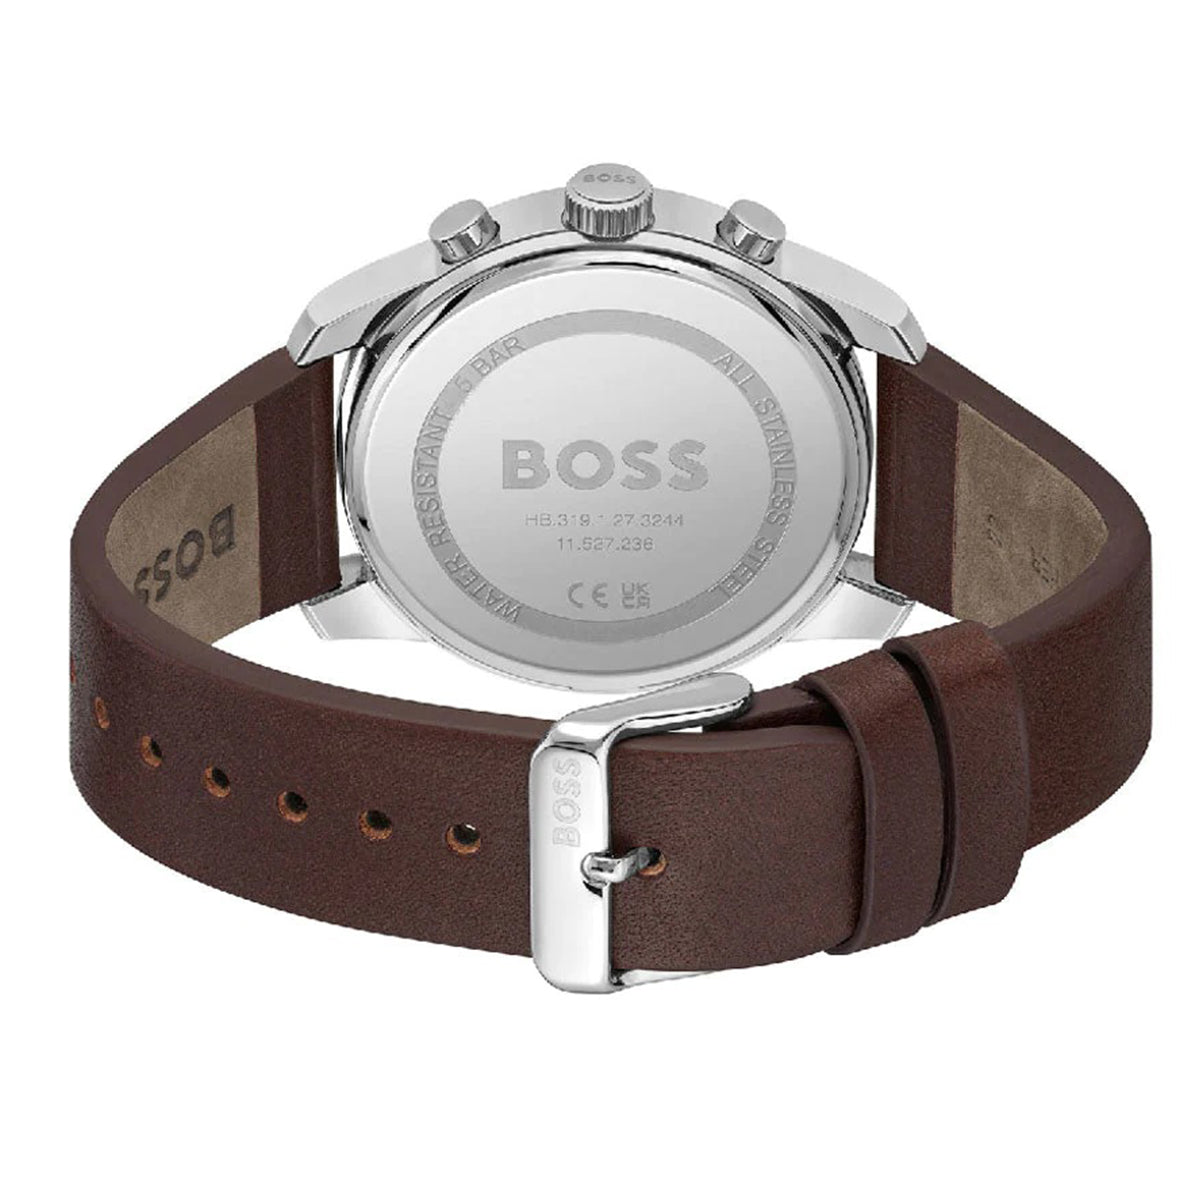 Boss - Trace - HB151.4002